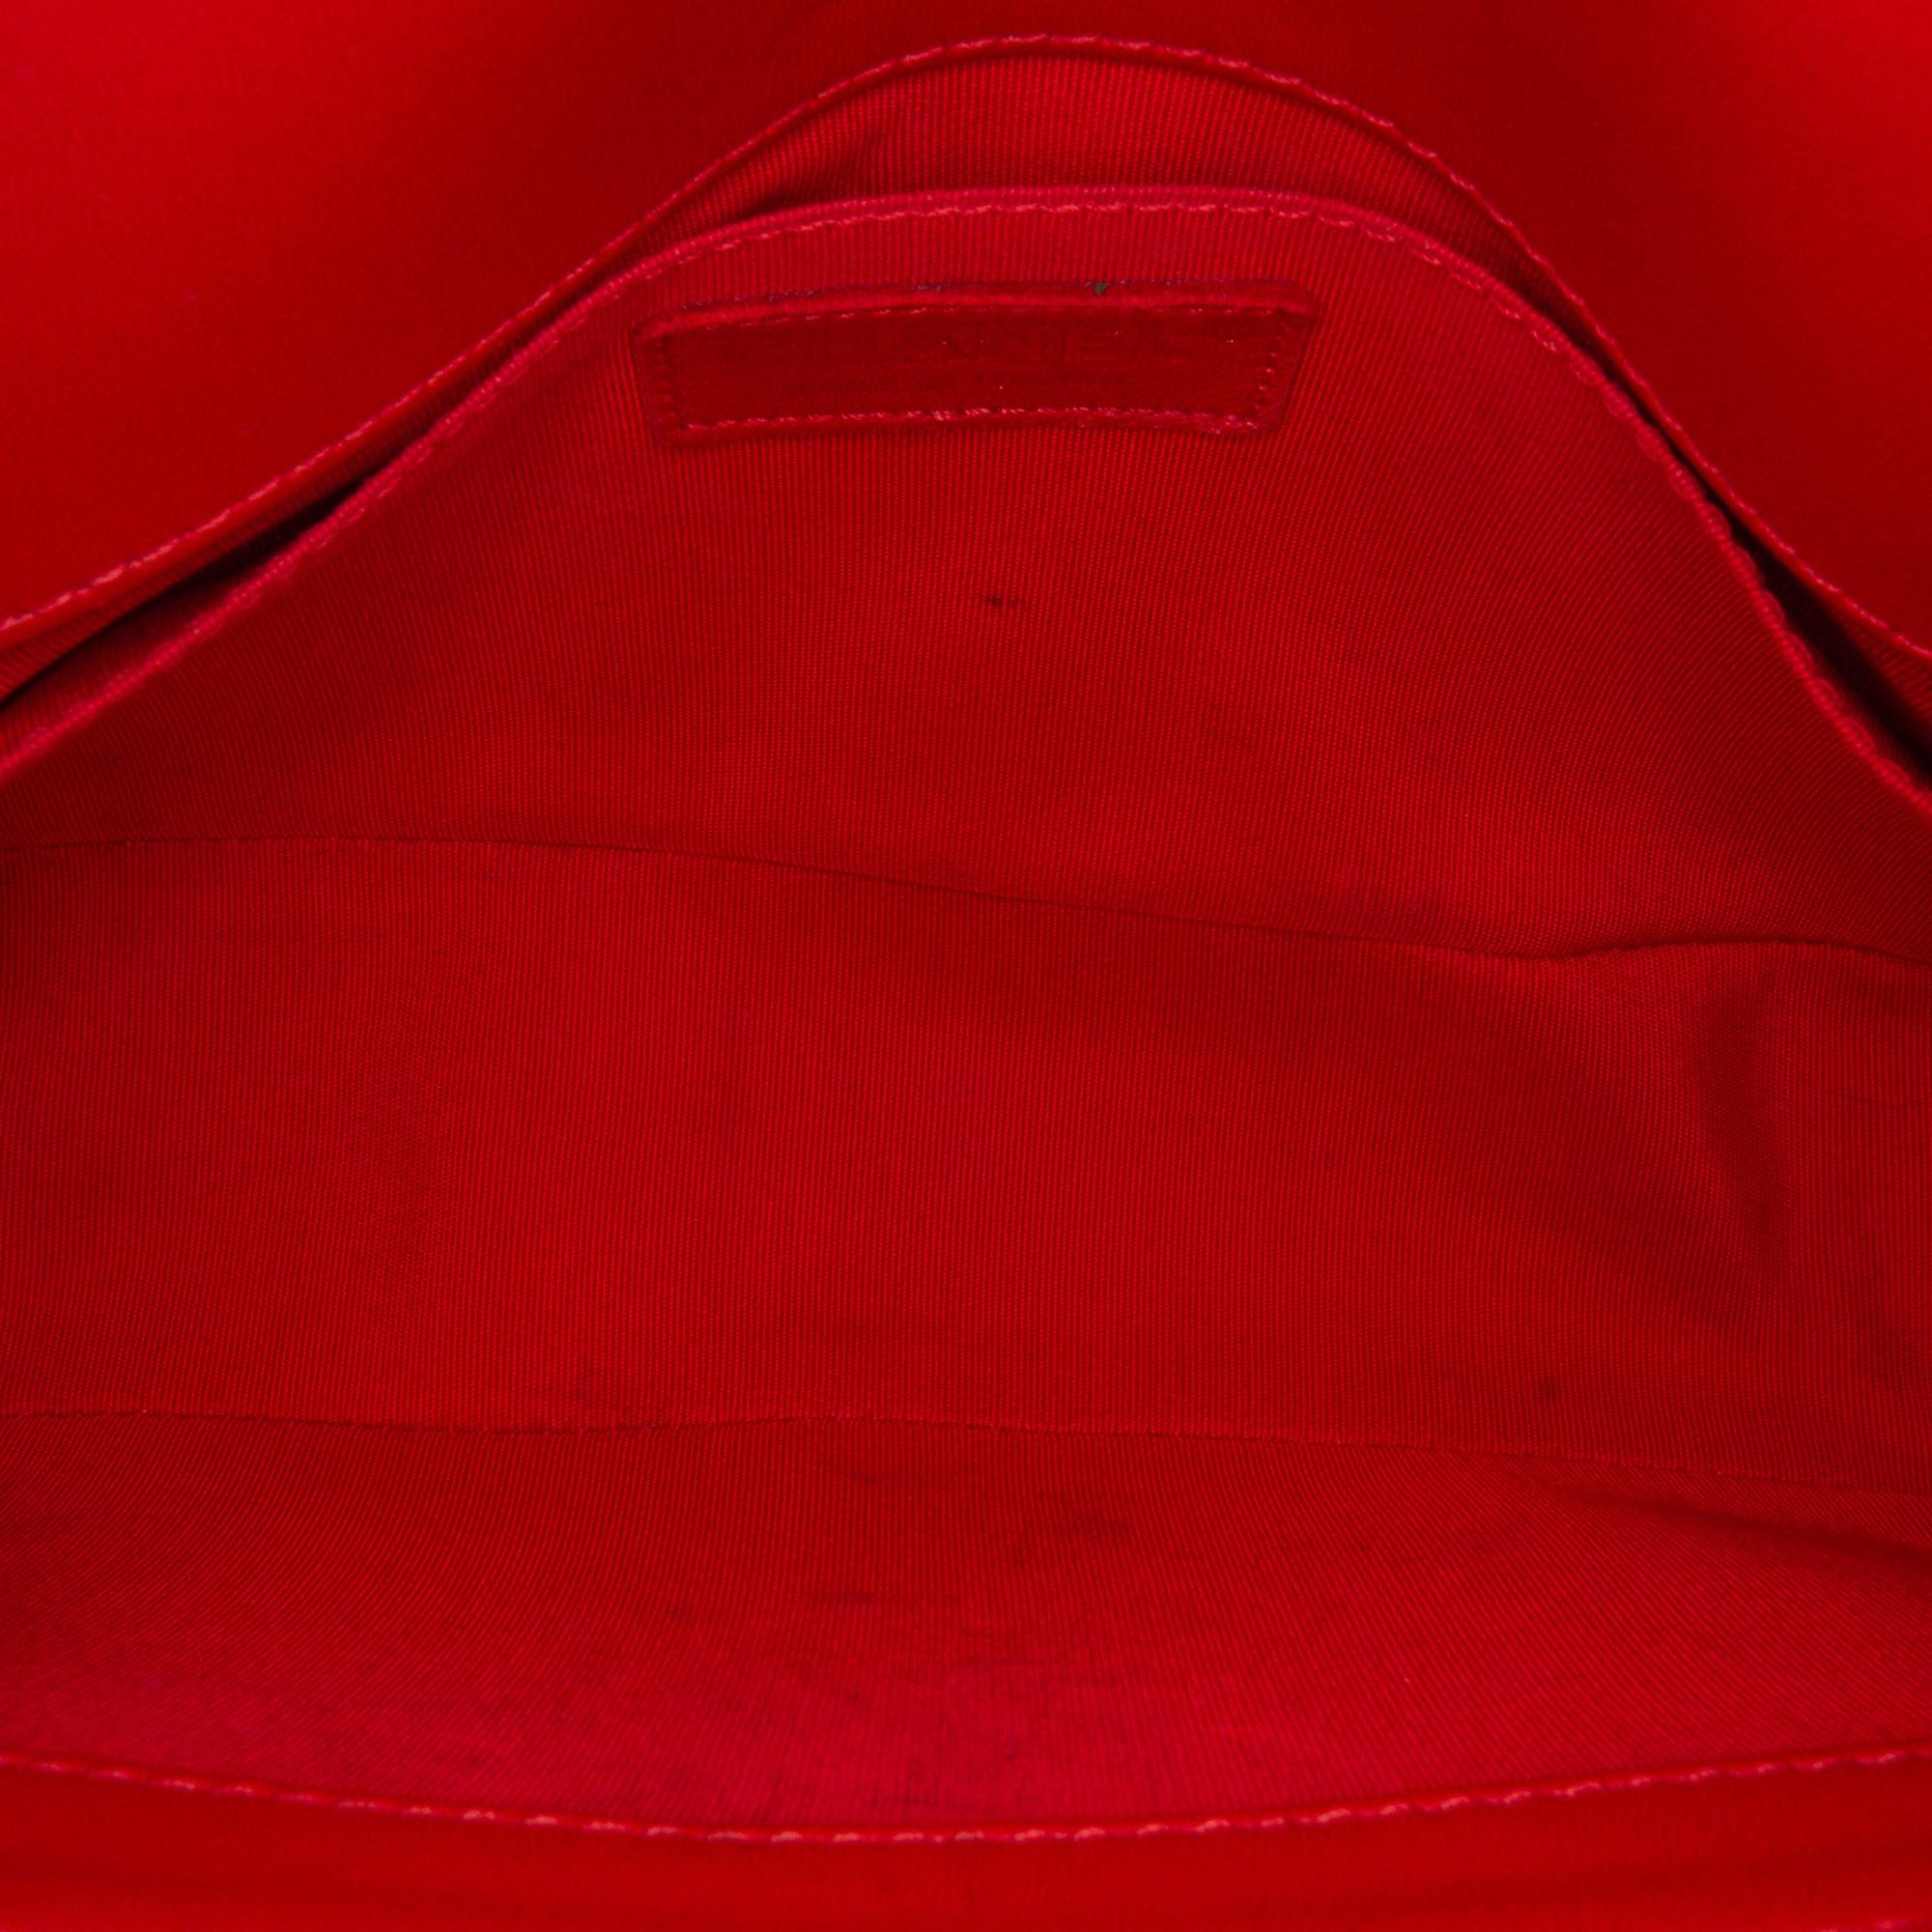 Chanel Red Medium Lambskin Boy Flap Bag